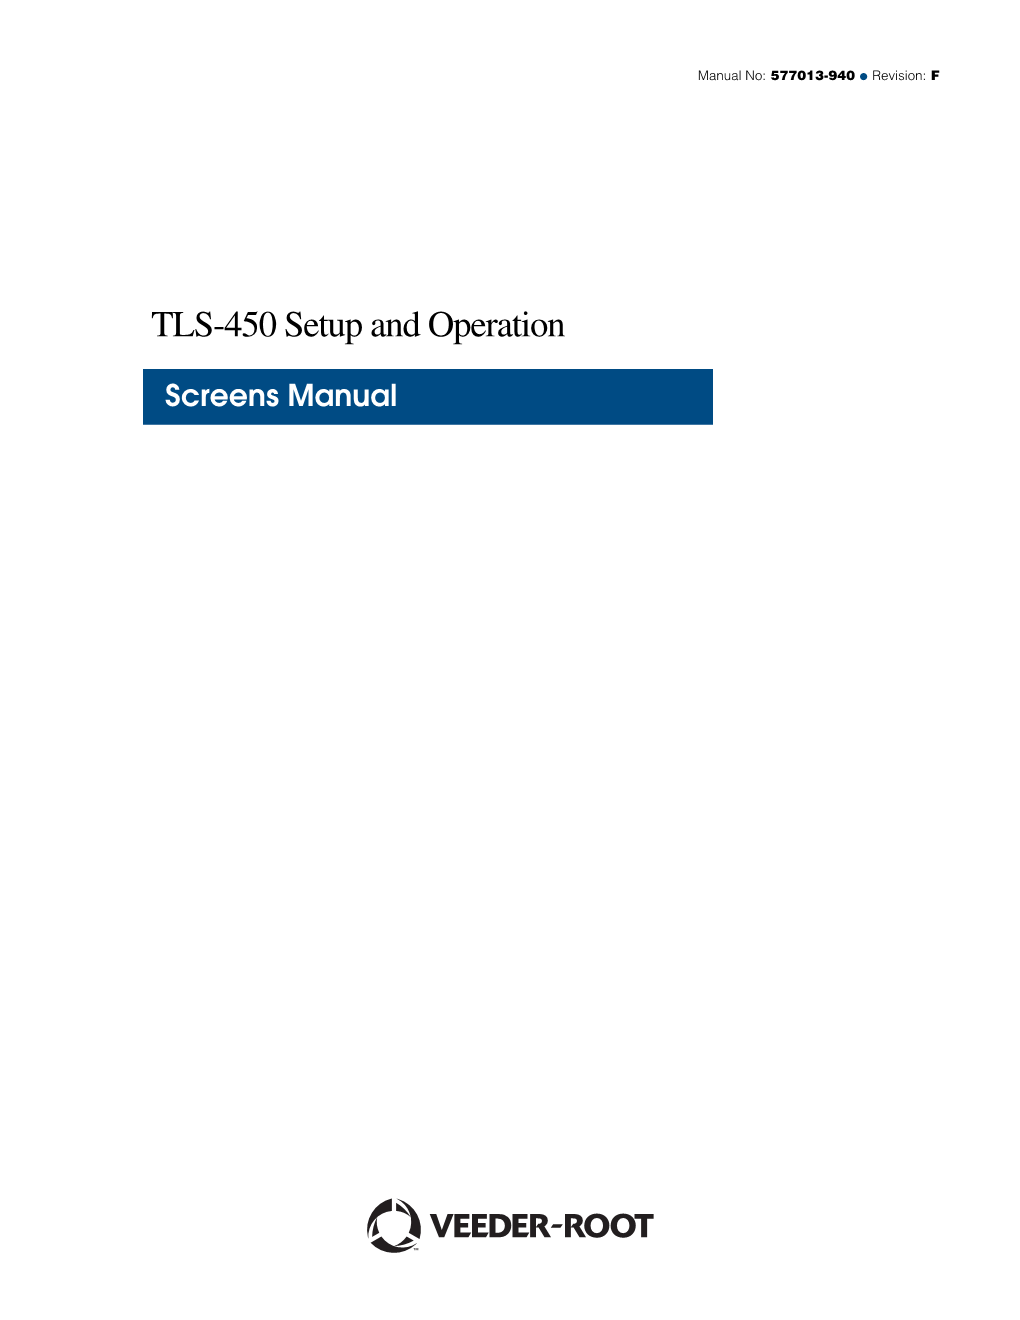 TLS-450 Setup and Operation